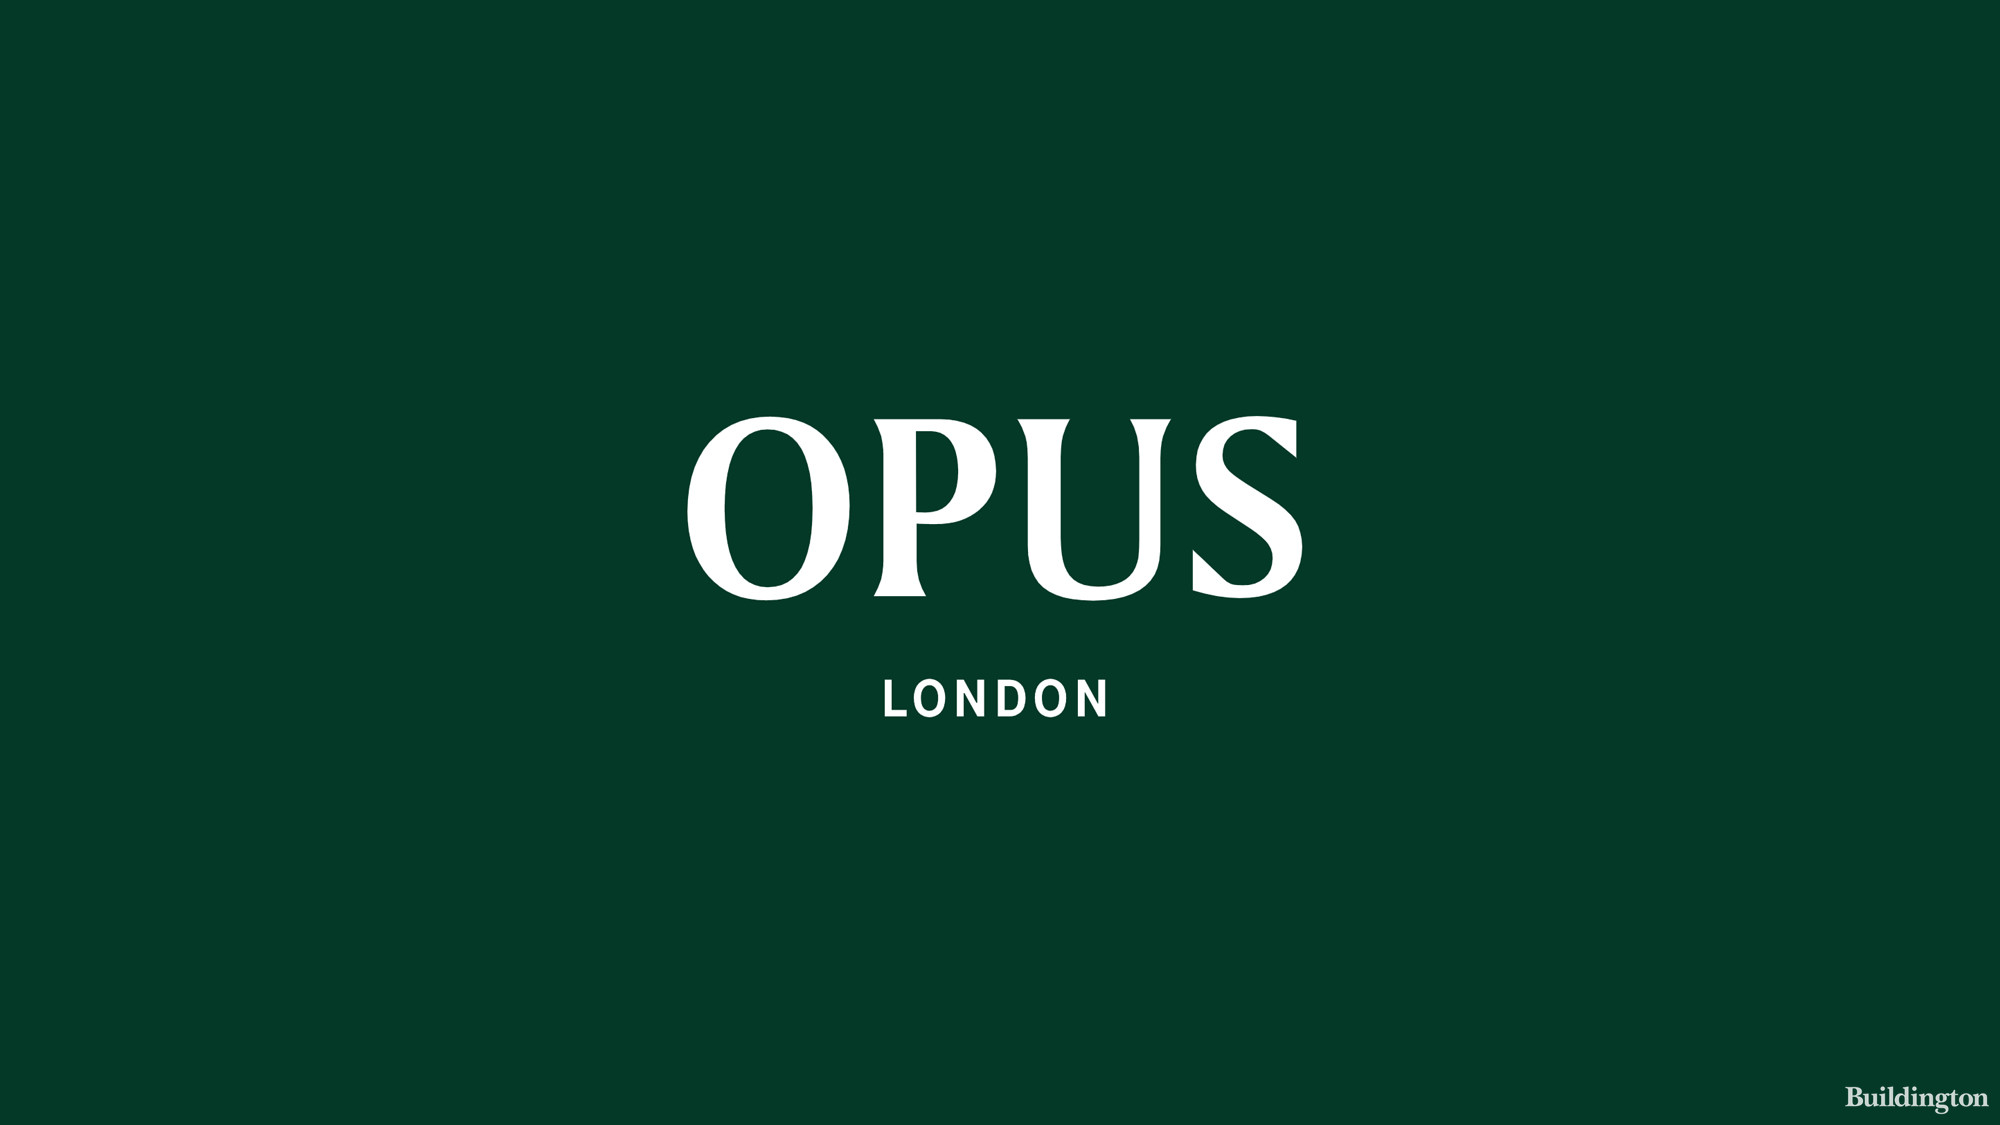 Opus apartment building logo at Bankside Yards development in Southwark, London SE1